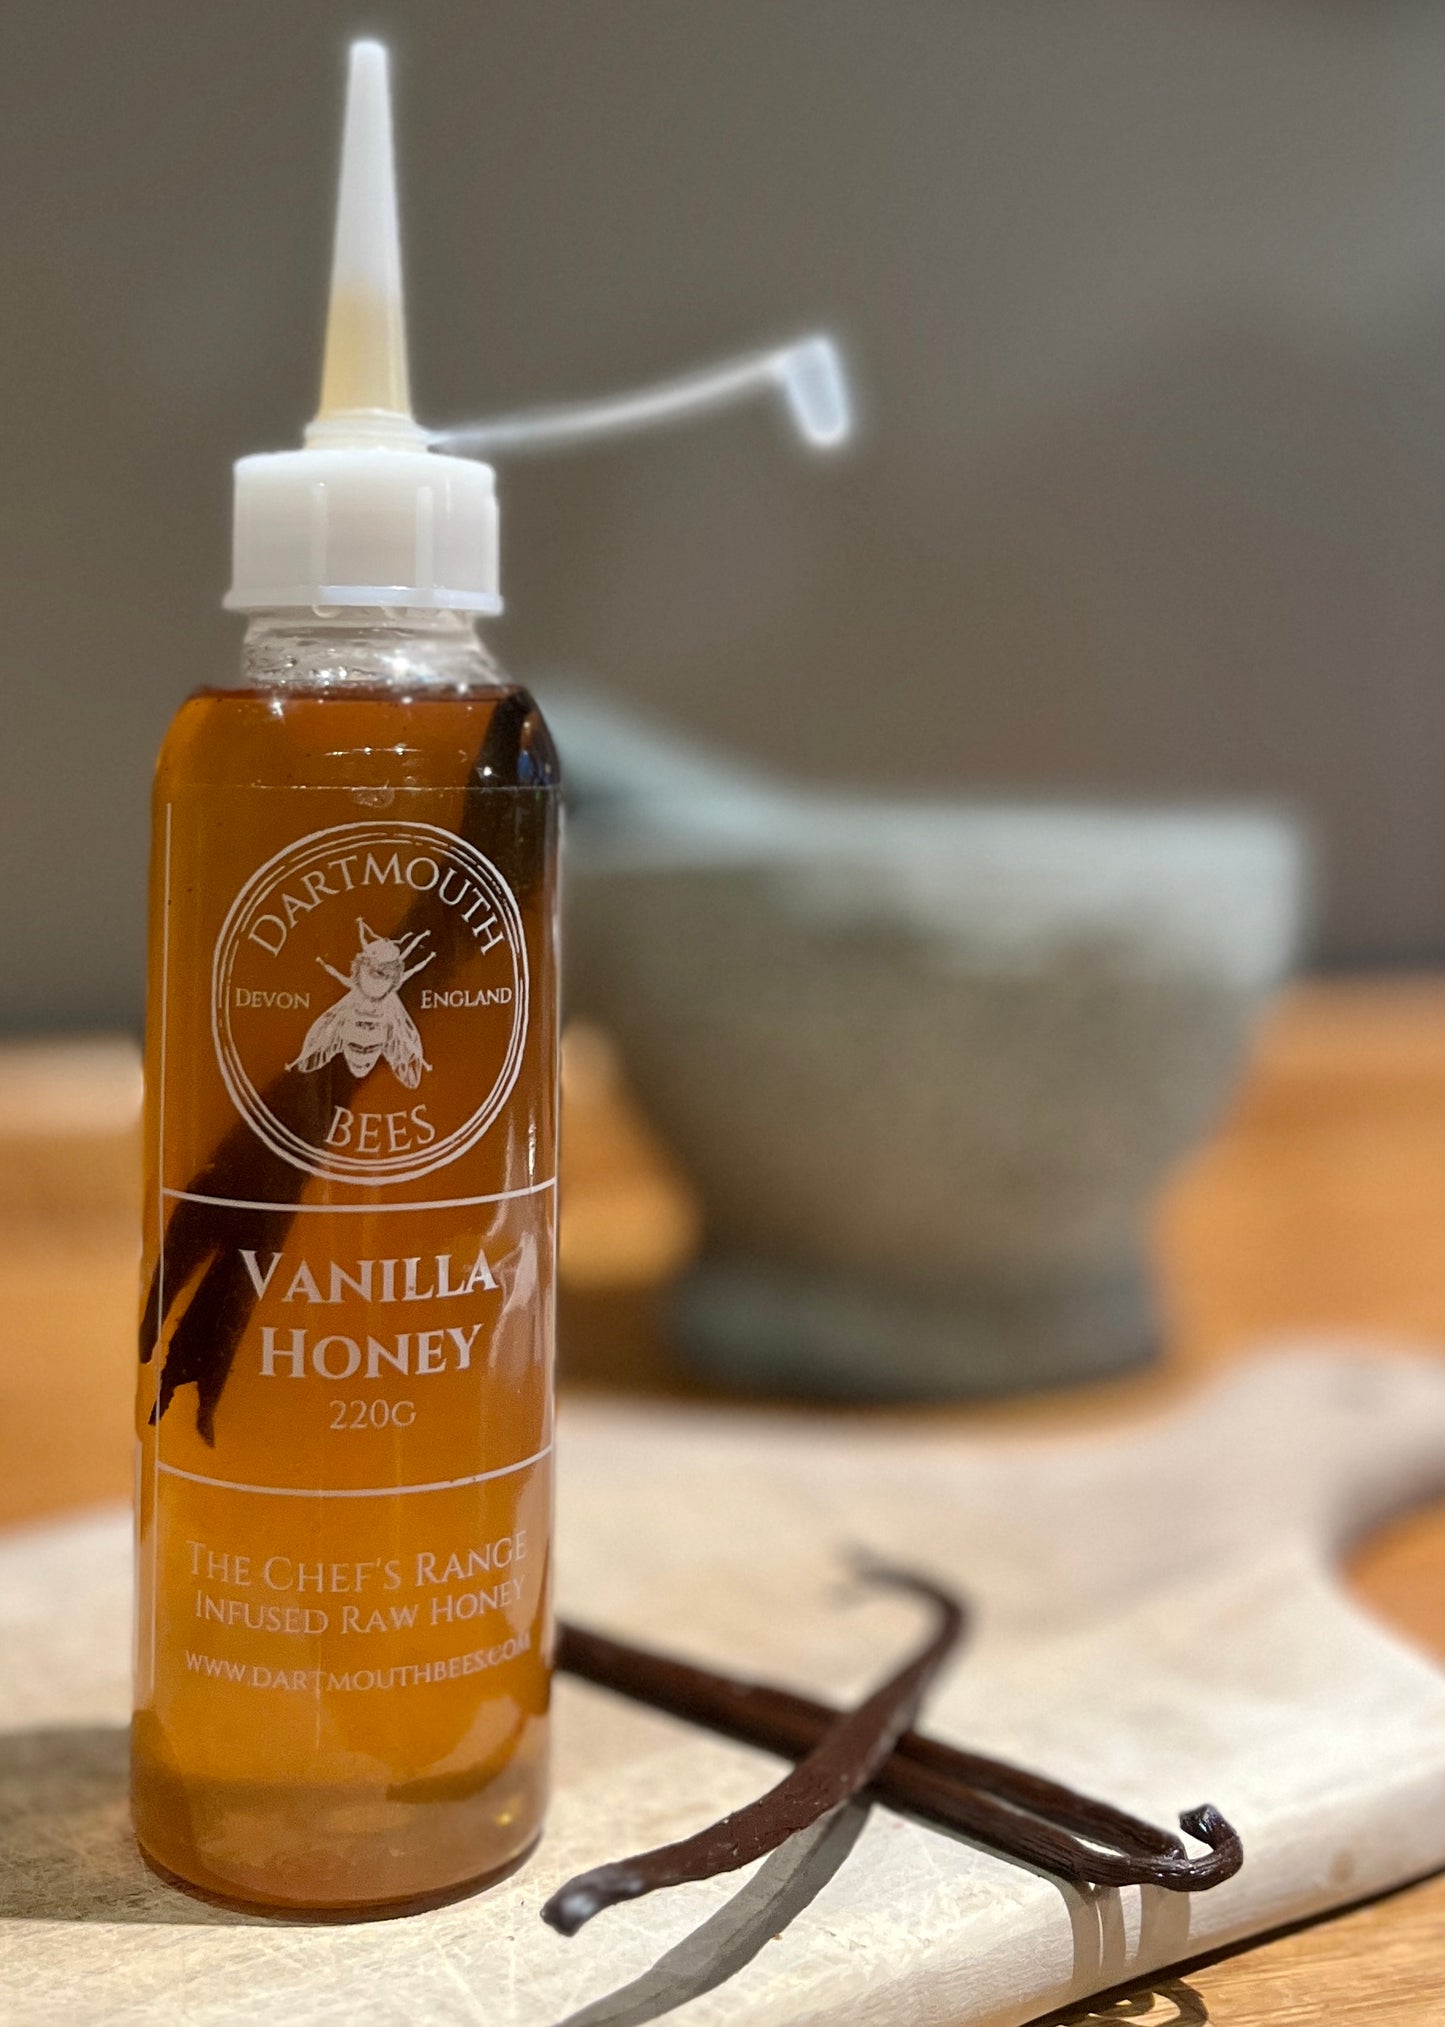 Vanilla honey